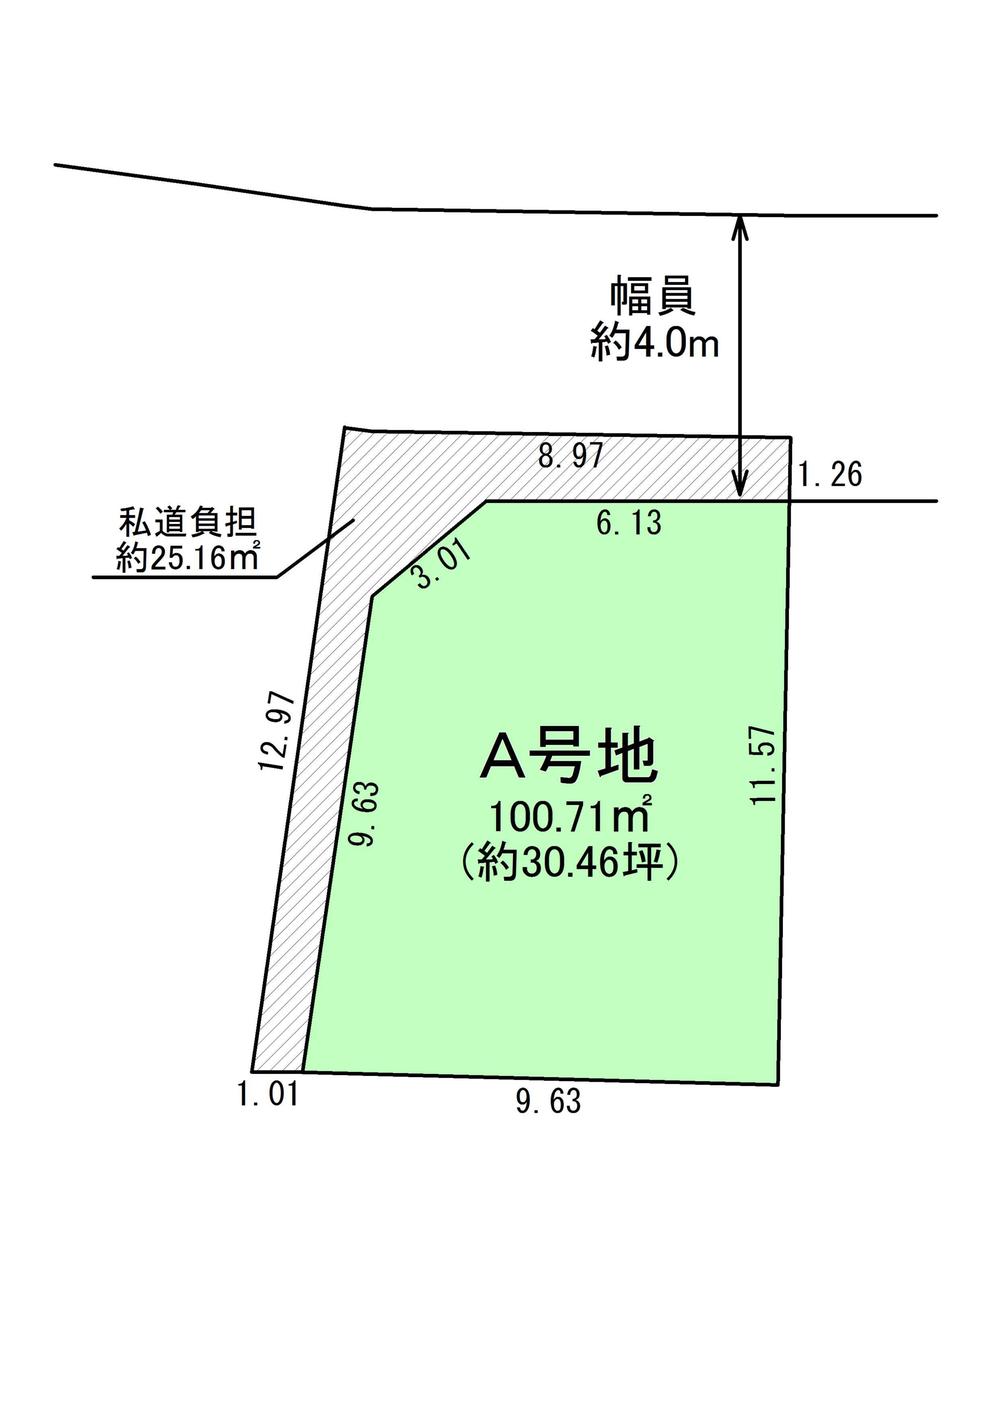 Compartment figure. Land price 20.1 million yen, Land area 100.71 sq m